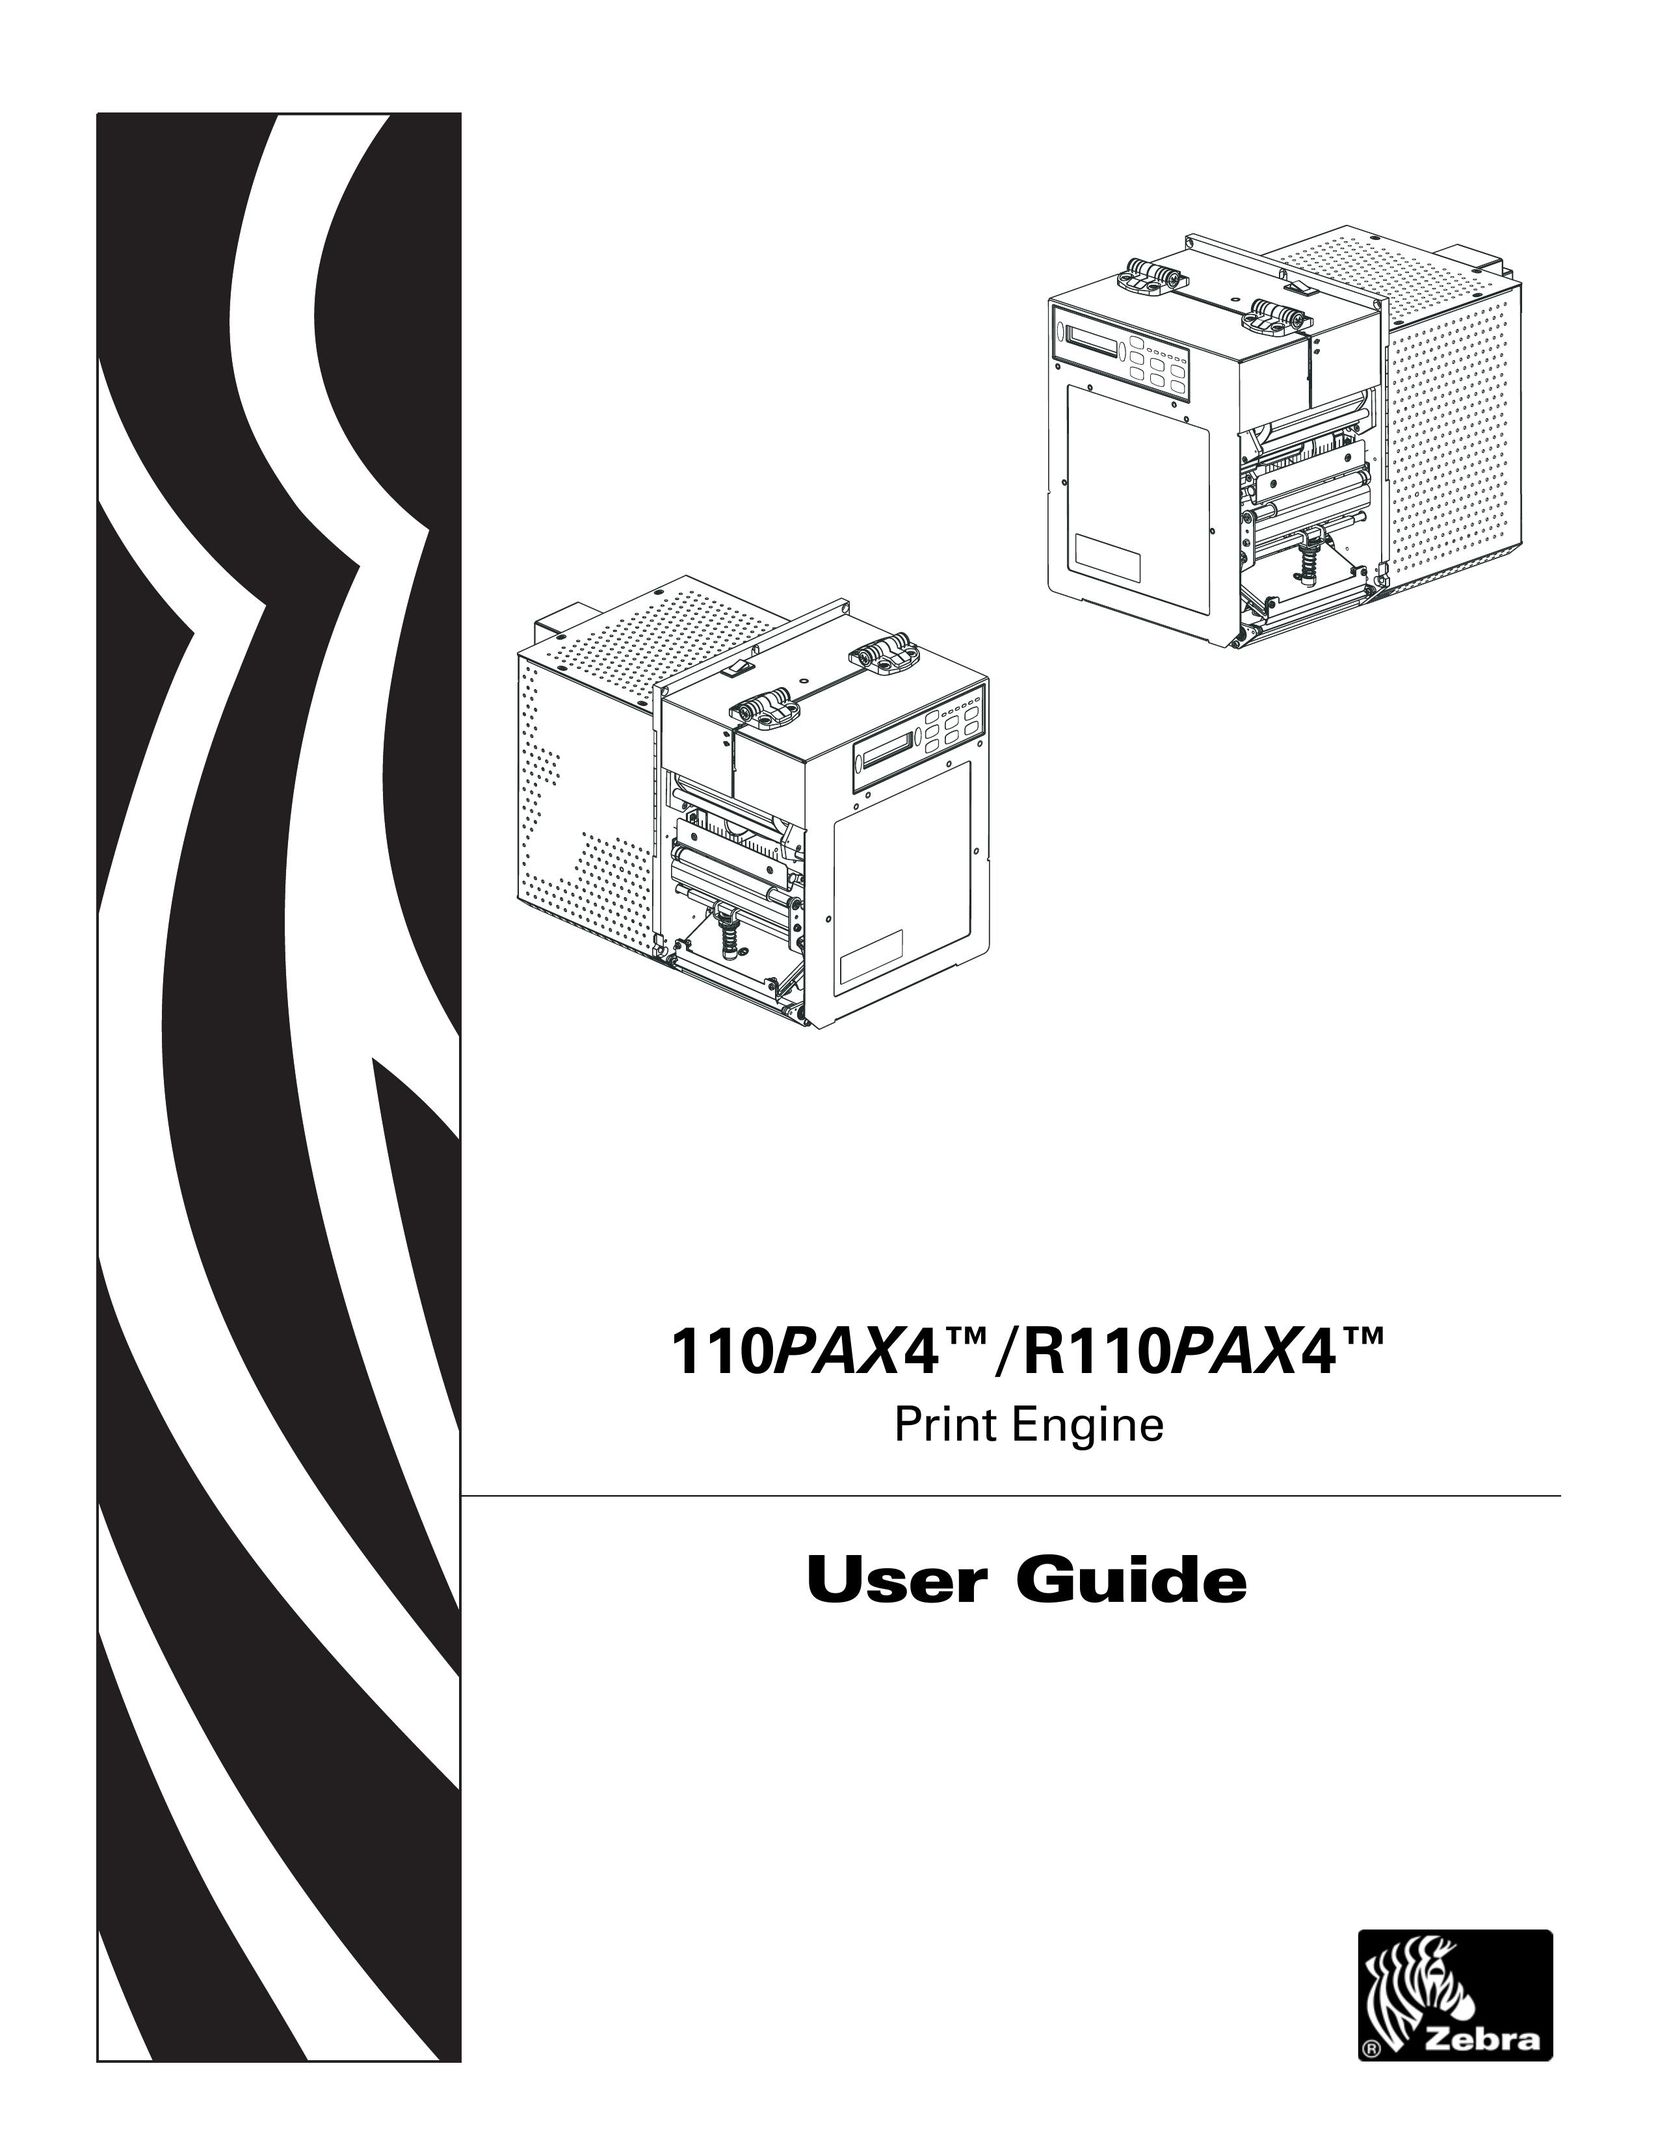 Zebra Technologies 110PAX4 Printer Accessories User Manual